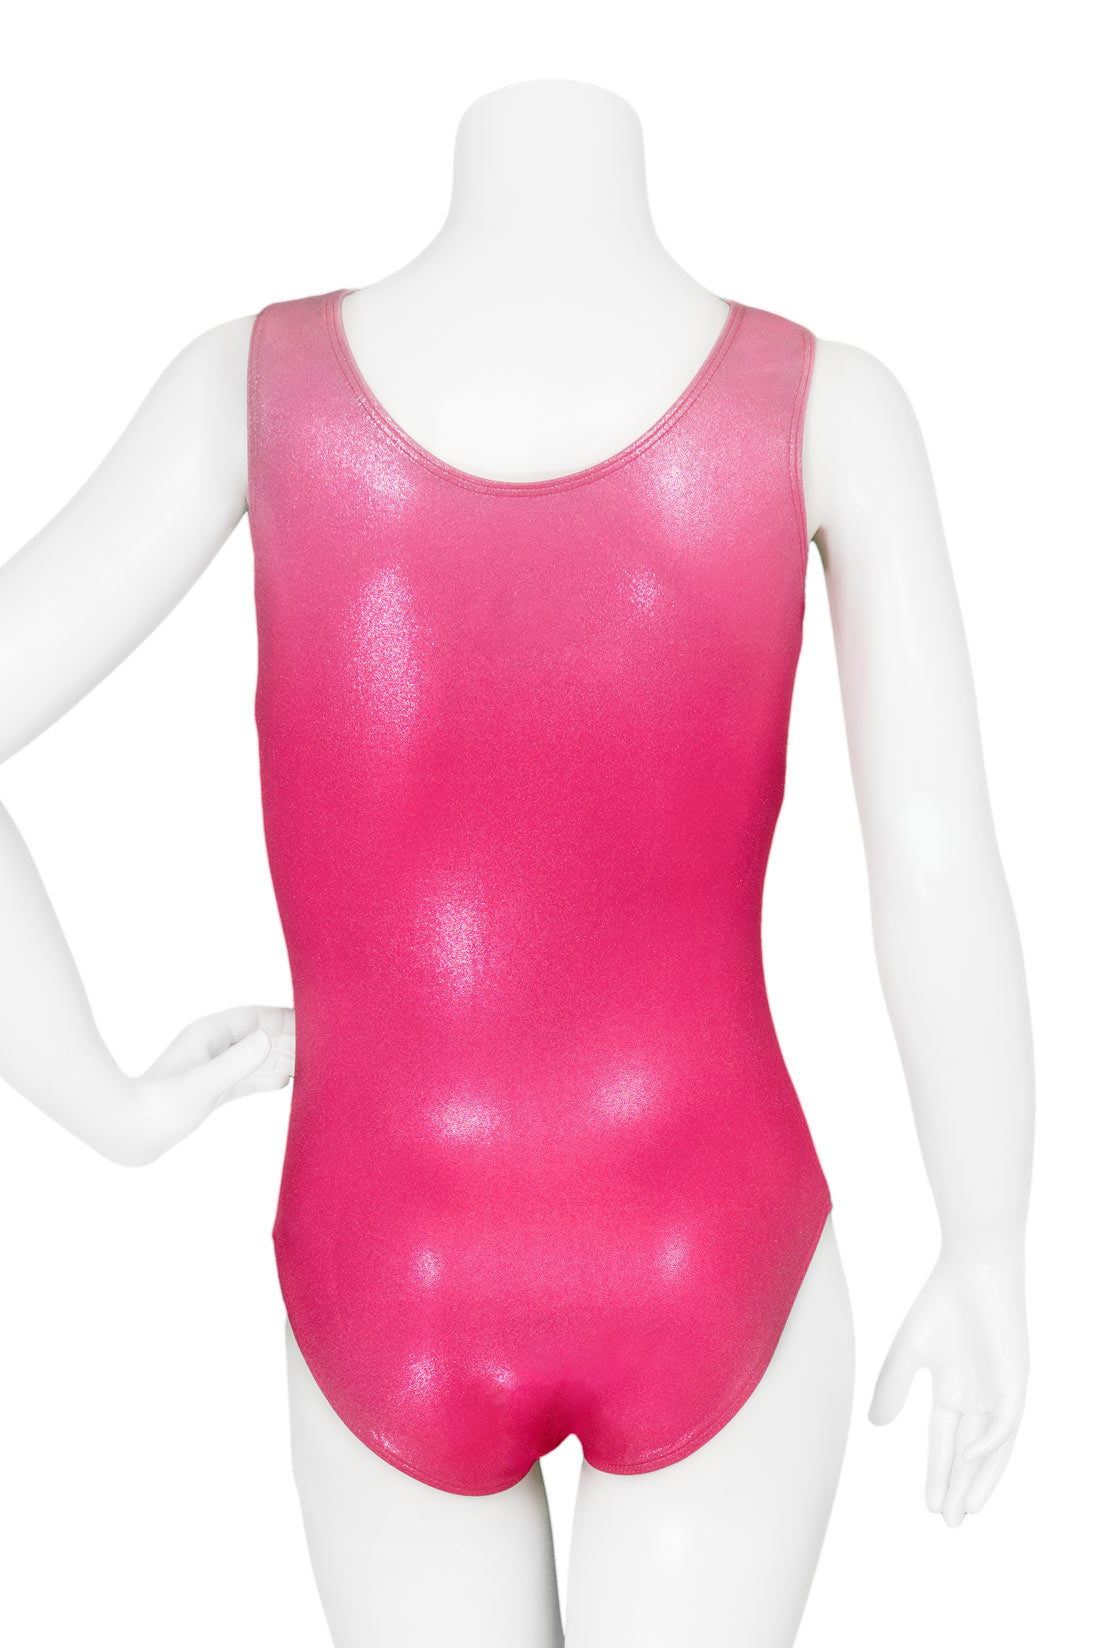 Back of hot pink shiny leotard for gymnastics, Destira, 2023